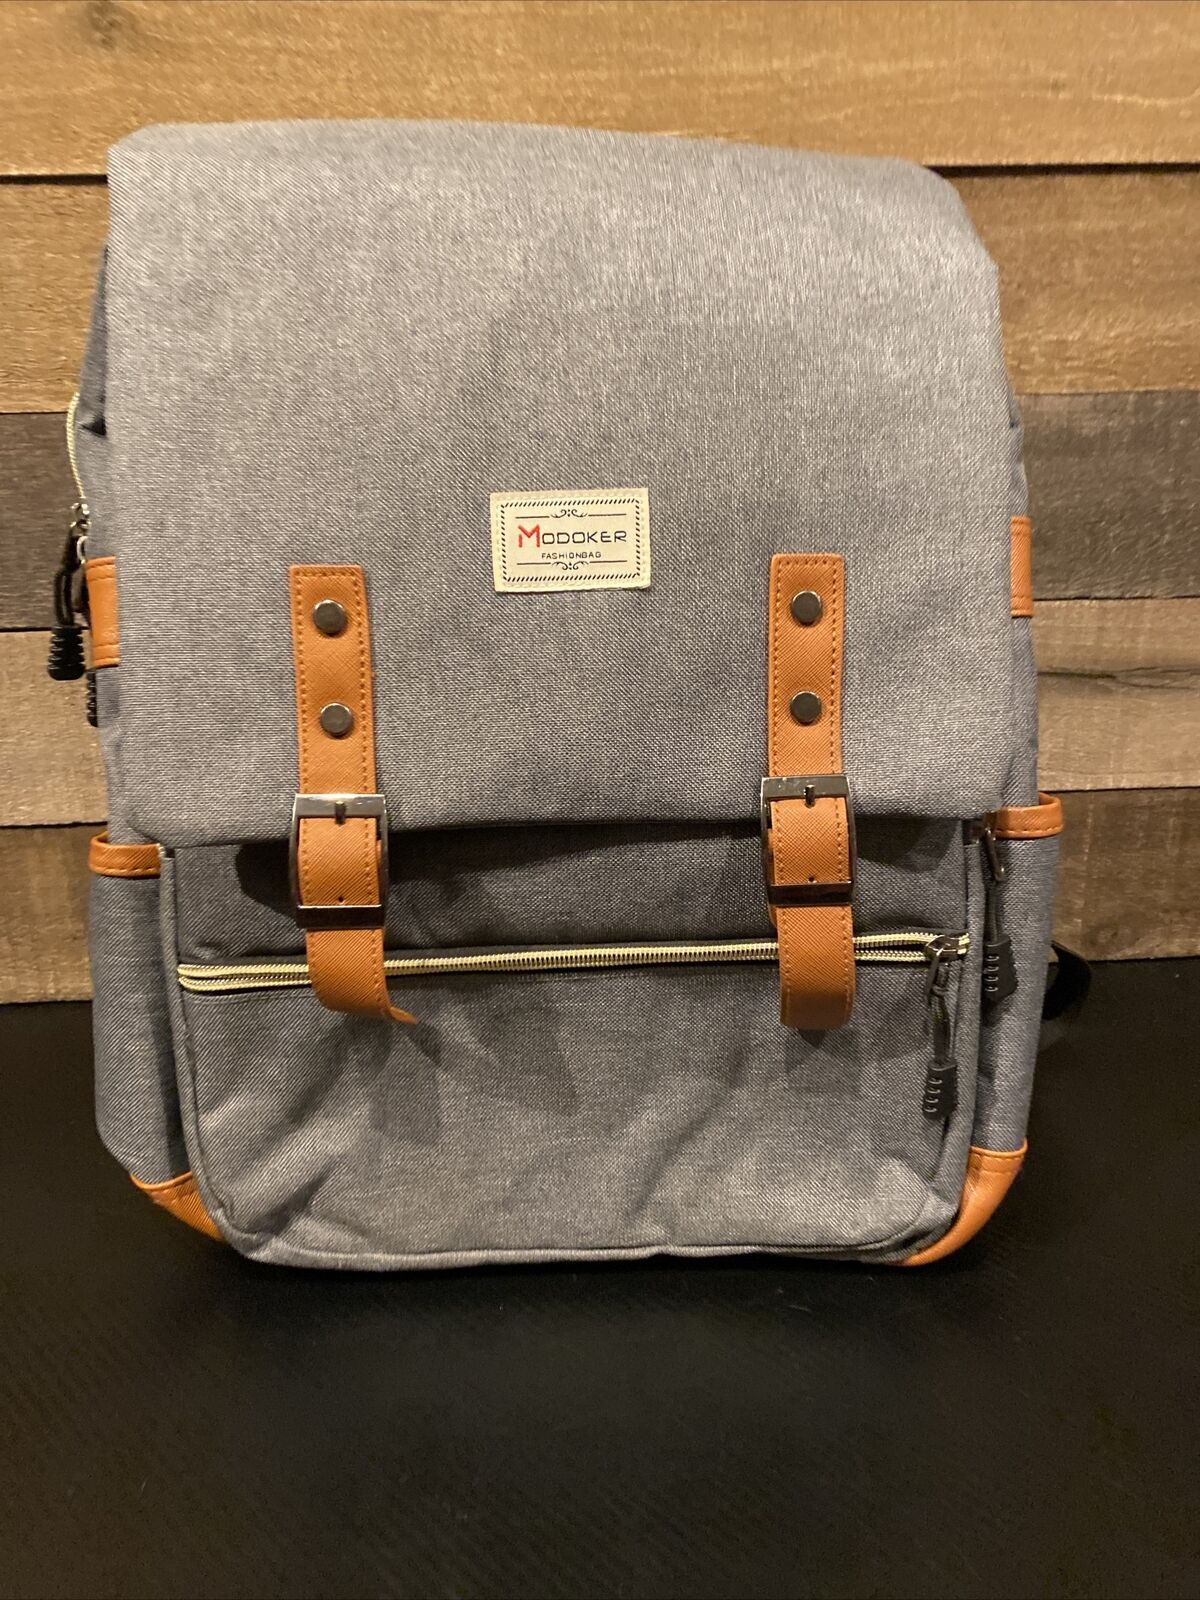 Backpack for Men and Women Vintage School College USB Charging Port Fashion Bag